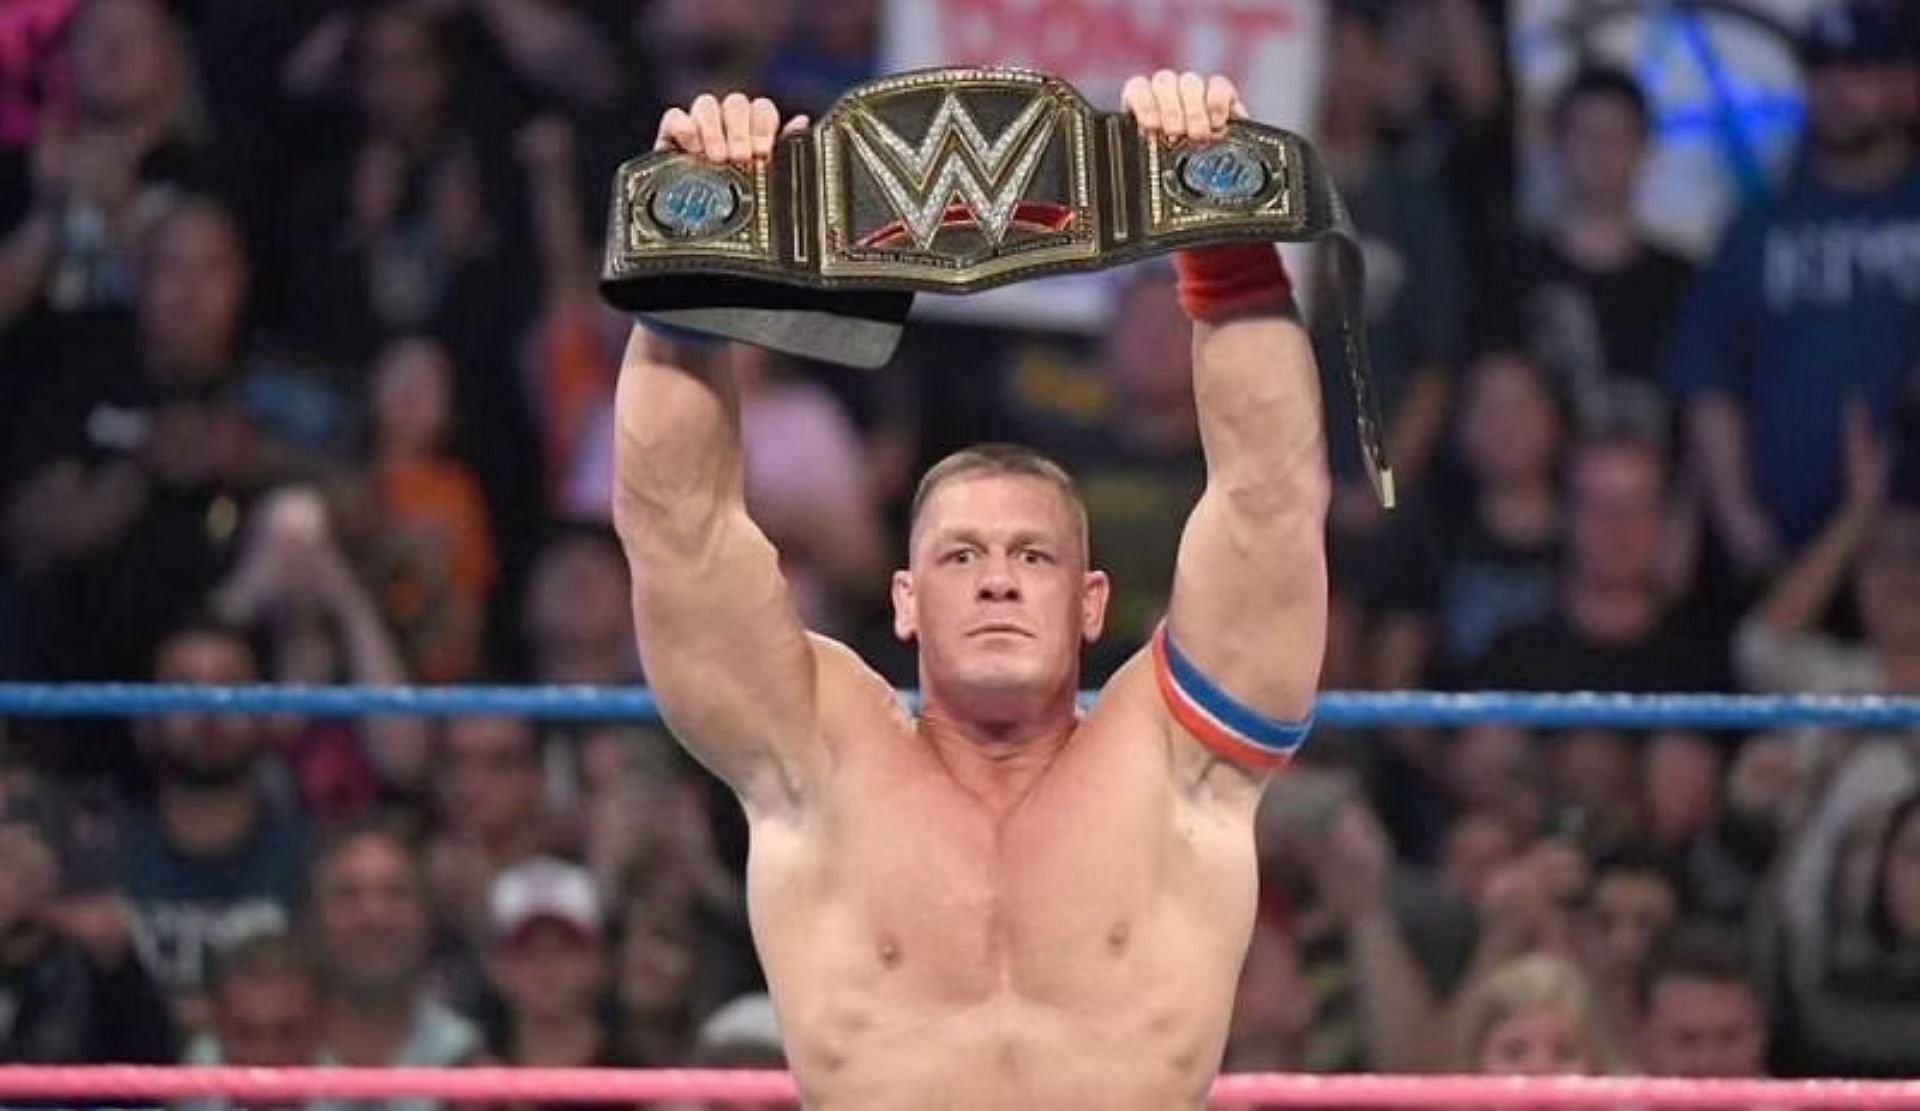 John Cena after winning his 16th WWE Championship